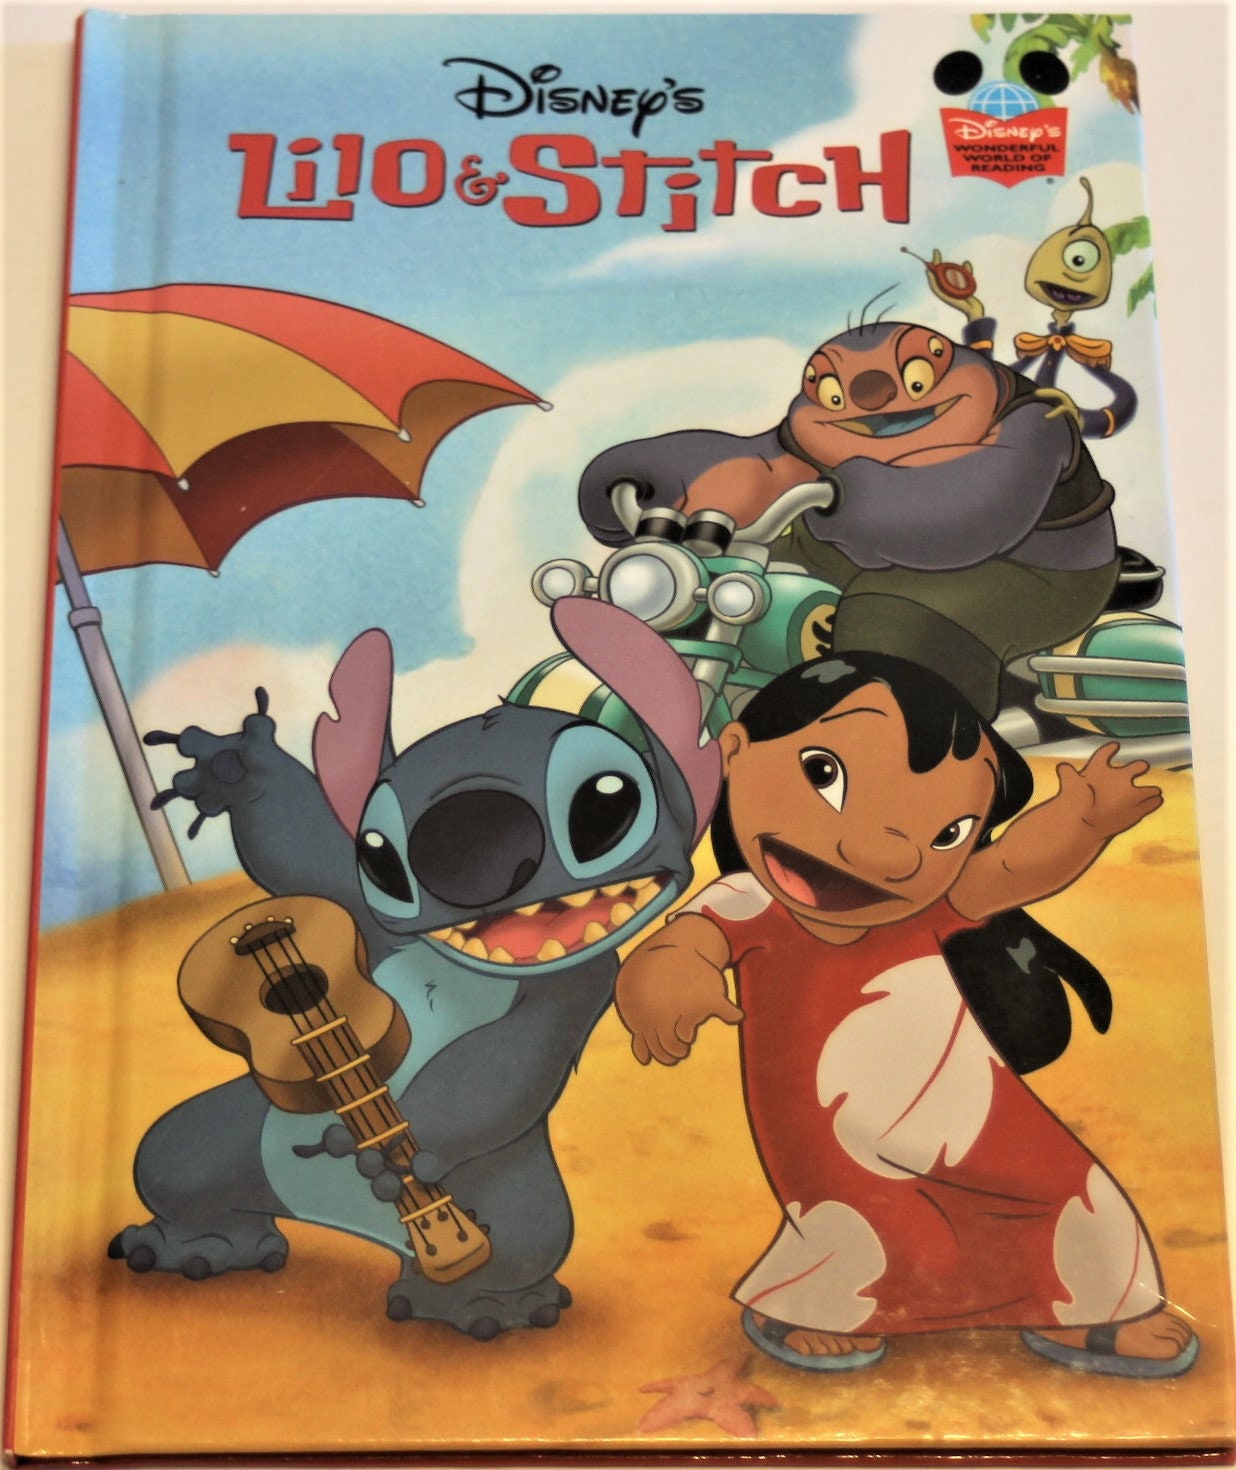 Stitch with Storybook